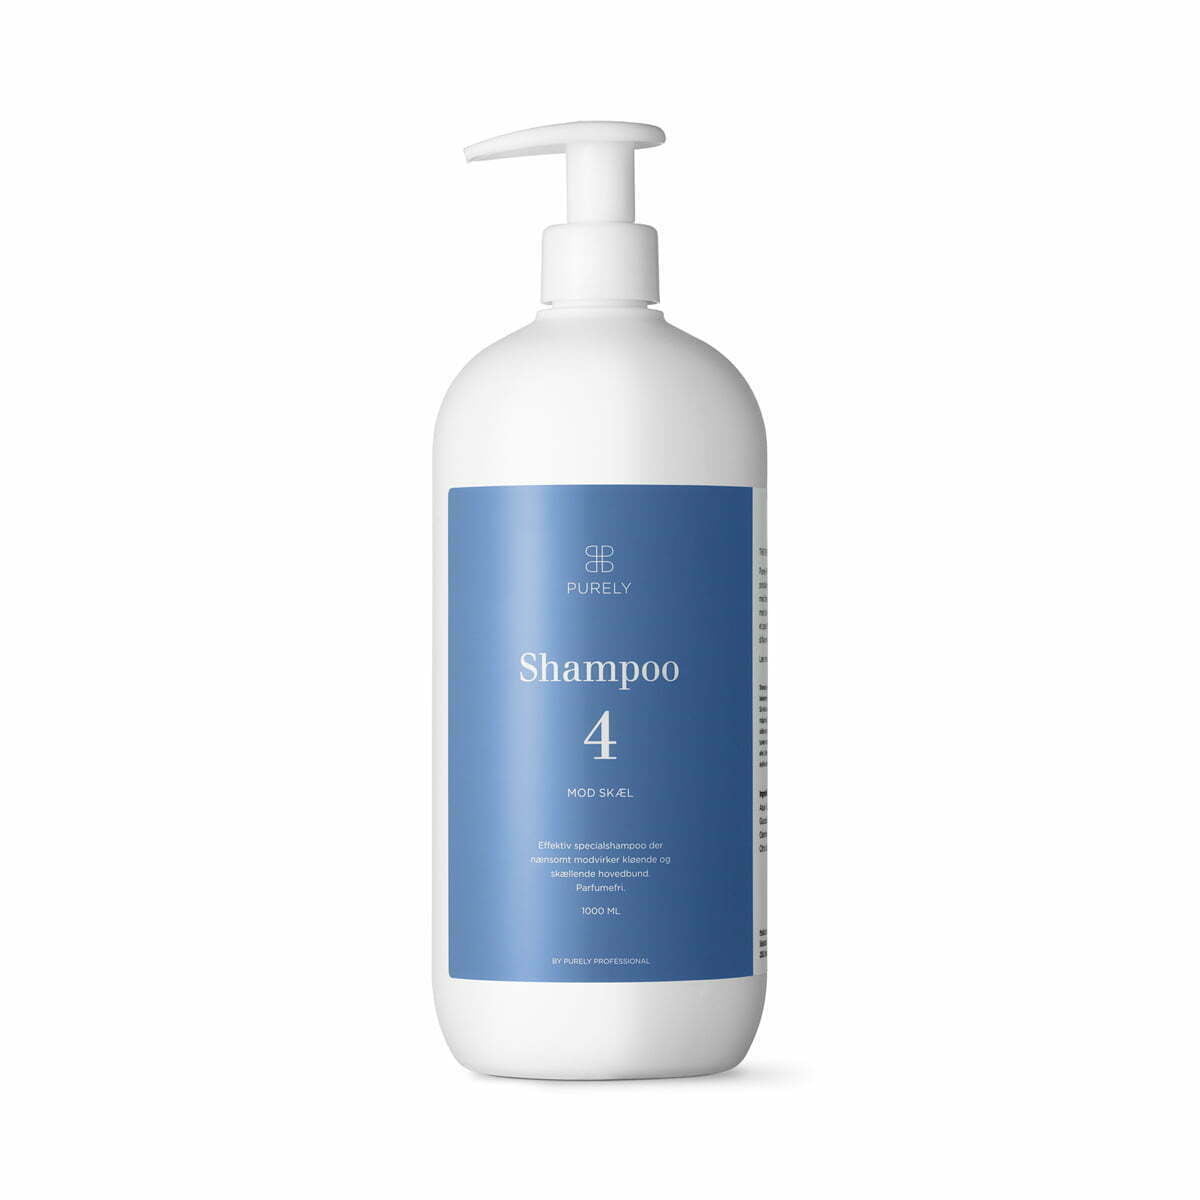 Shampoo 4 - 1000 ml